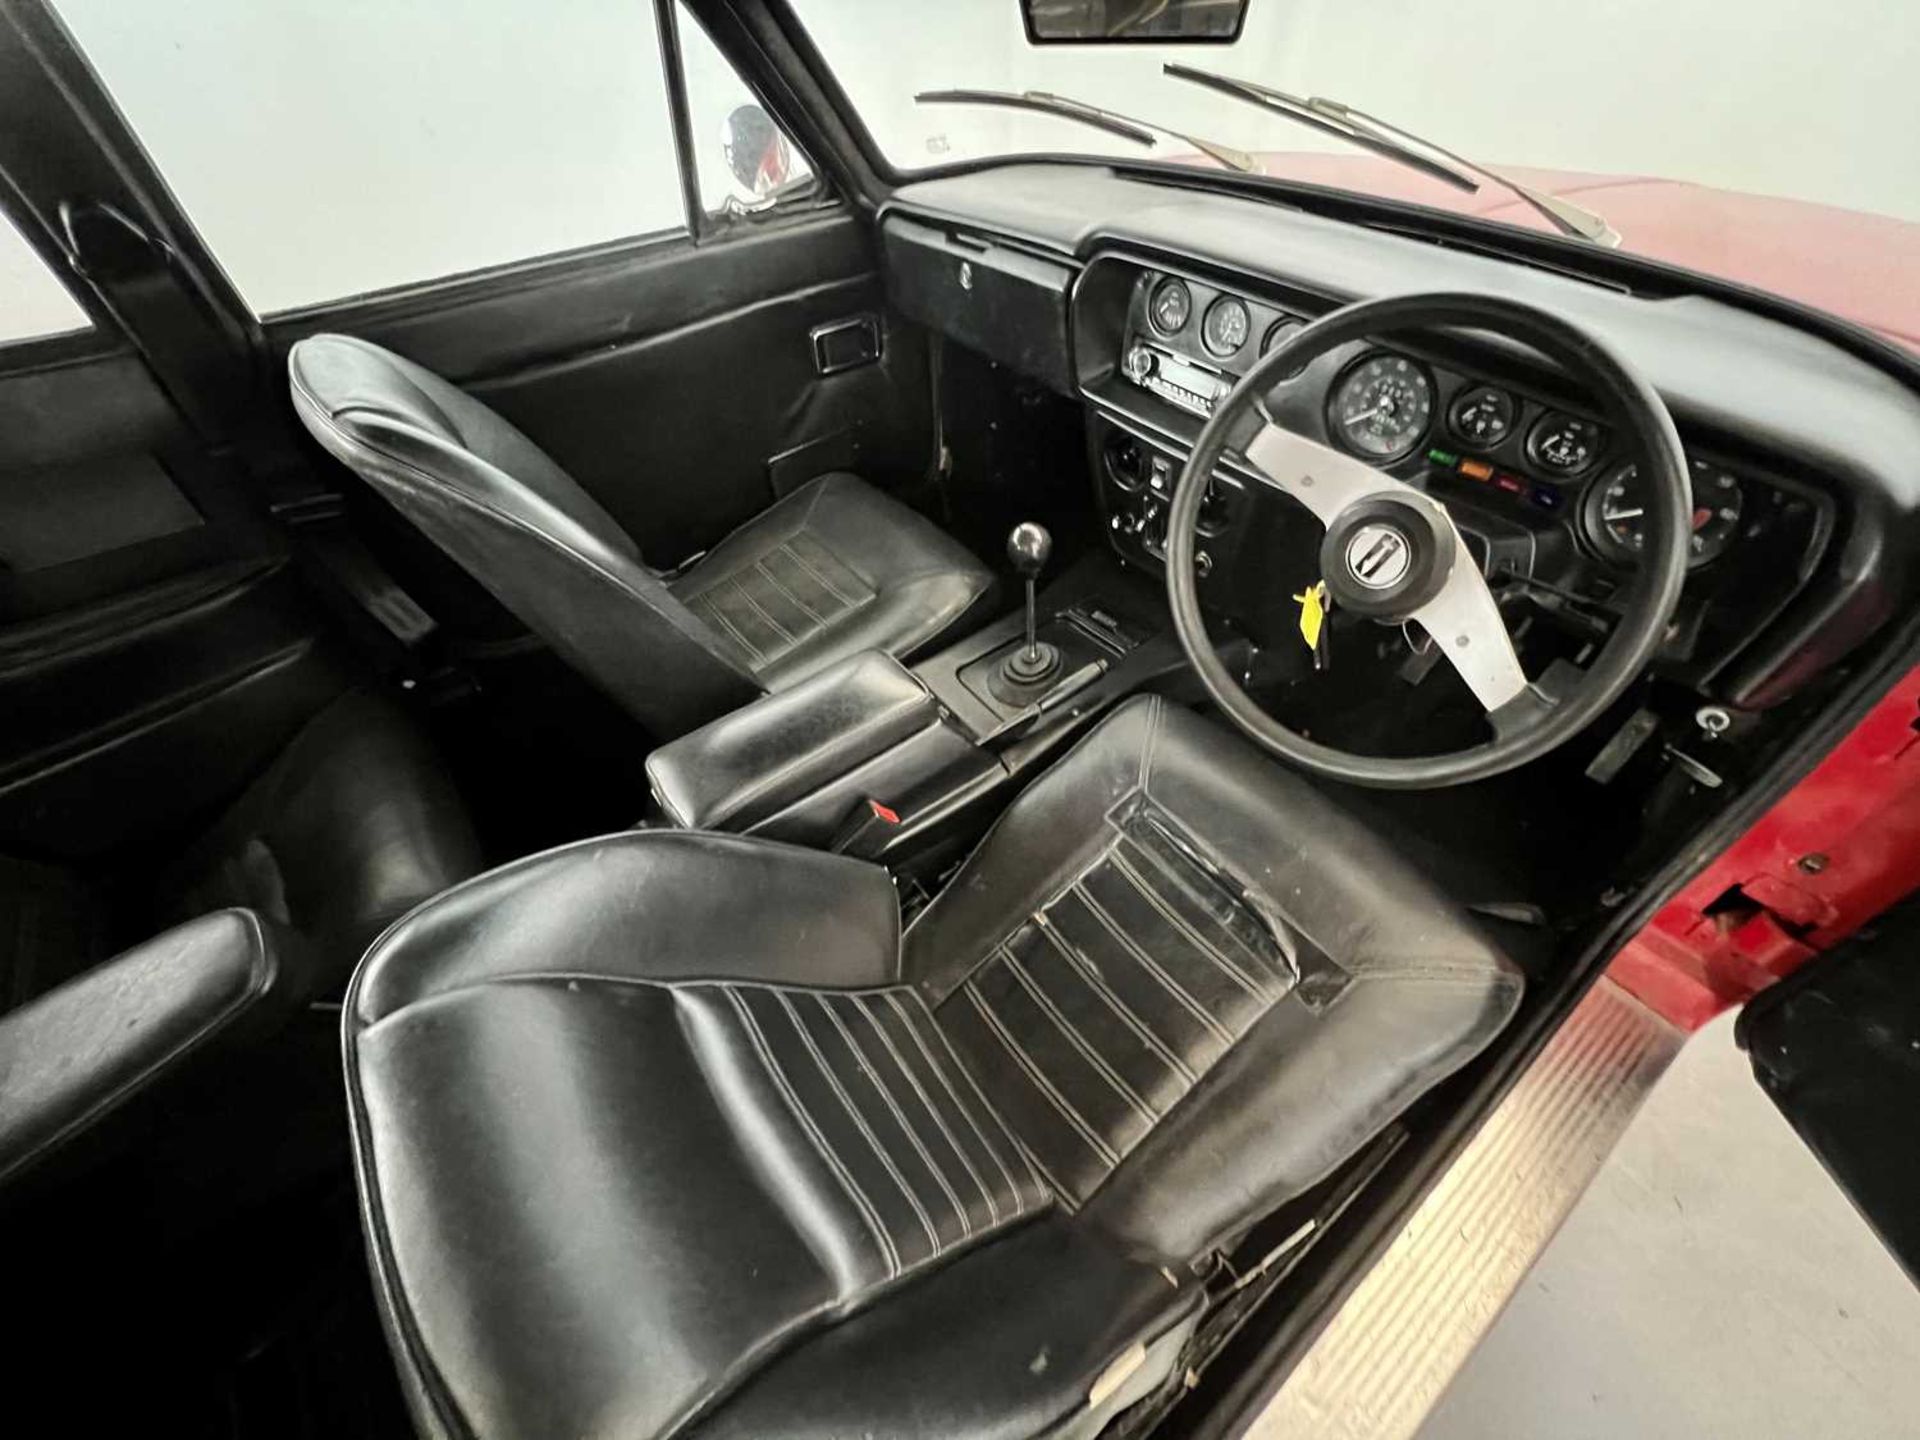 1974 Reliant Scimitar GTE - Image 19 of 25